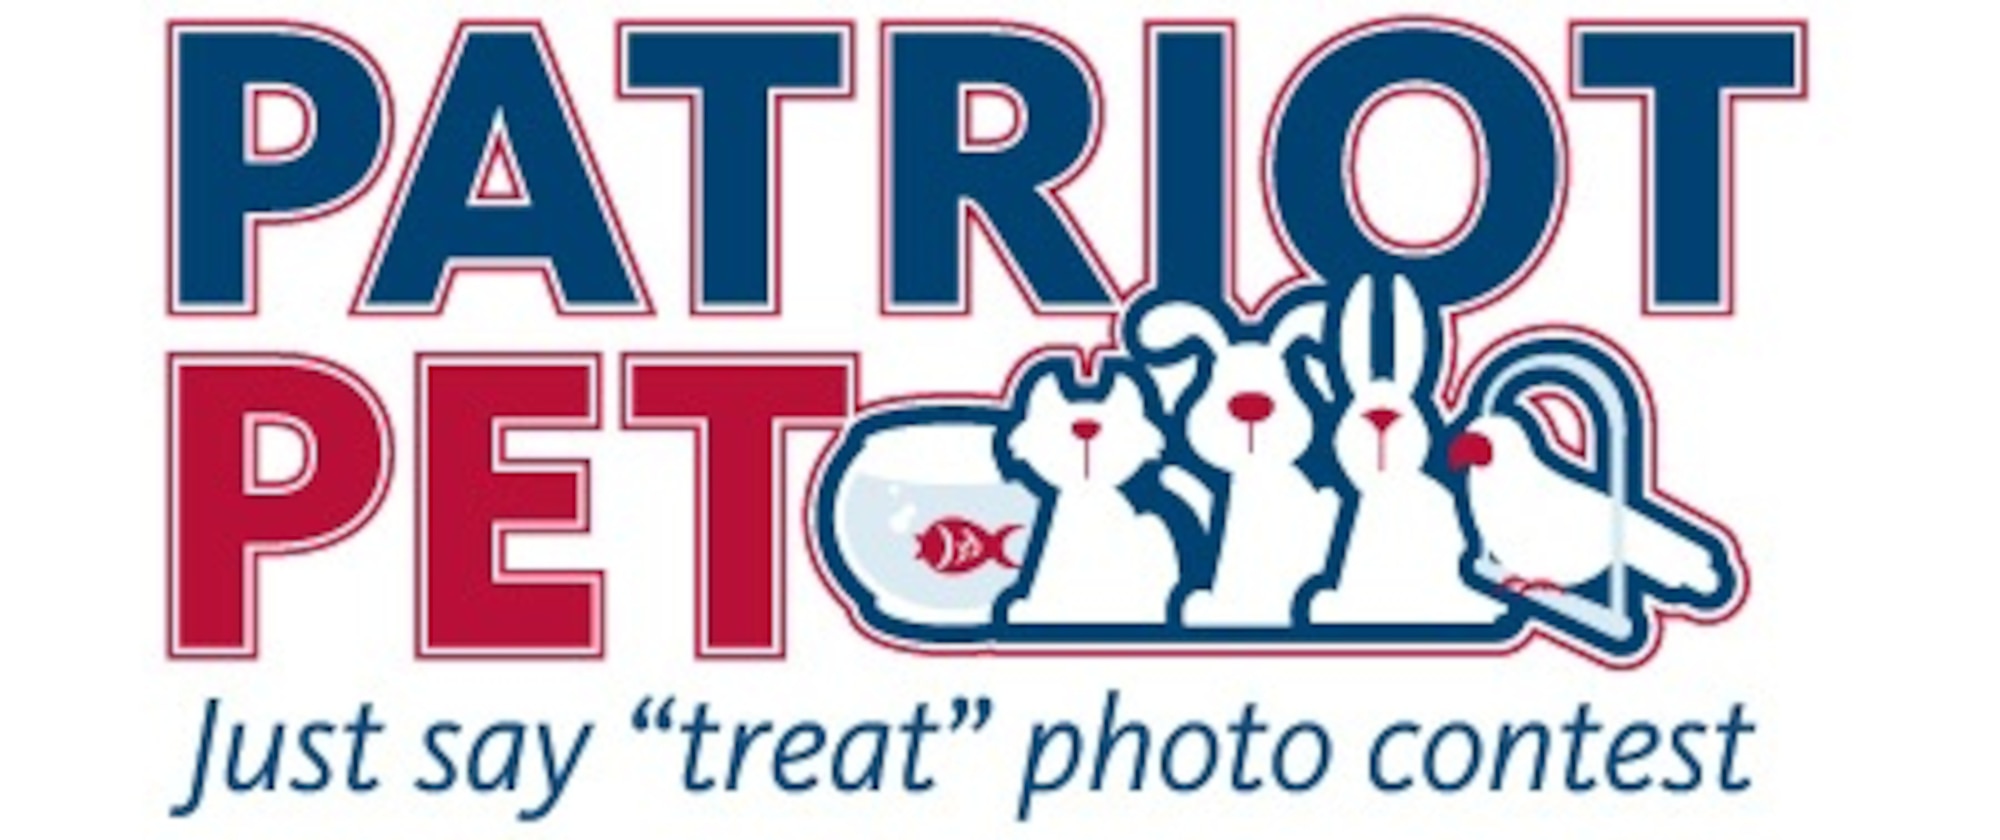 Patriot Pet photo contes